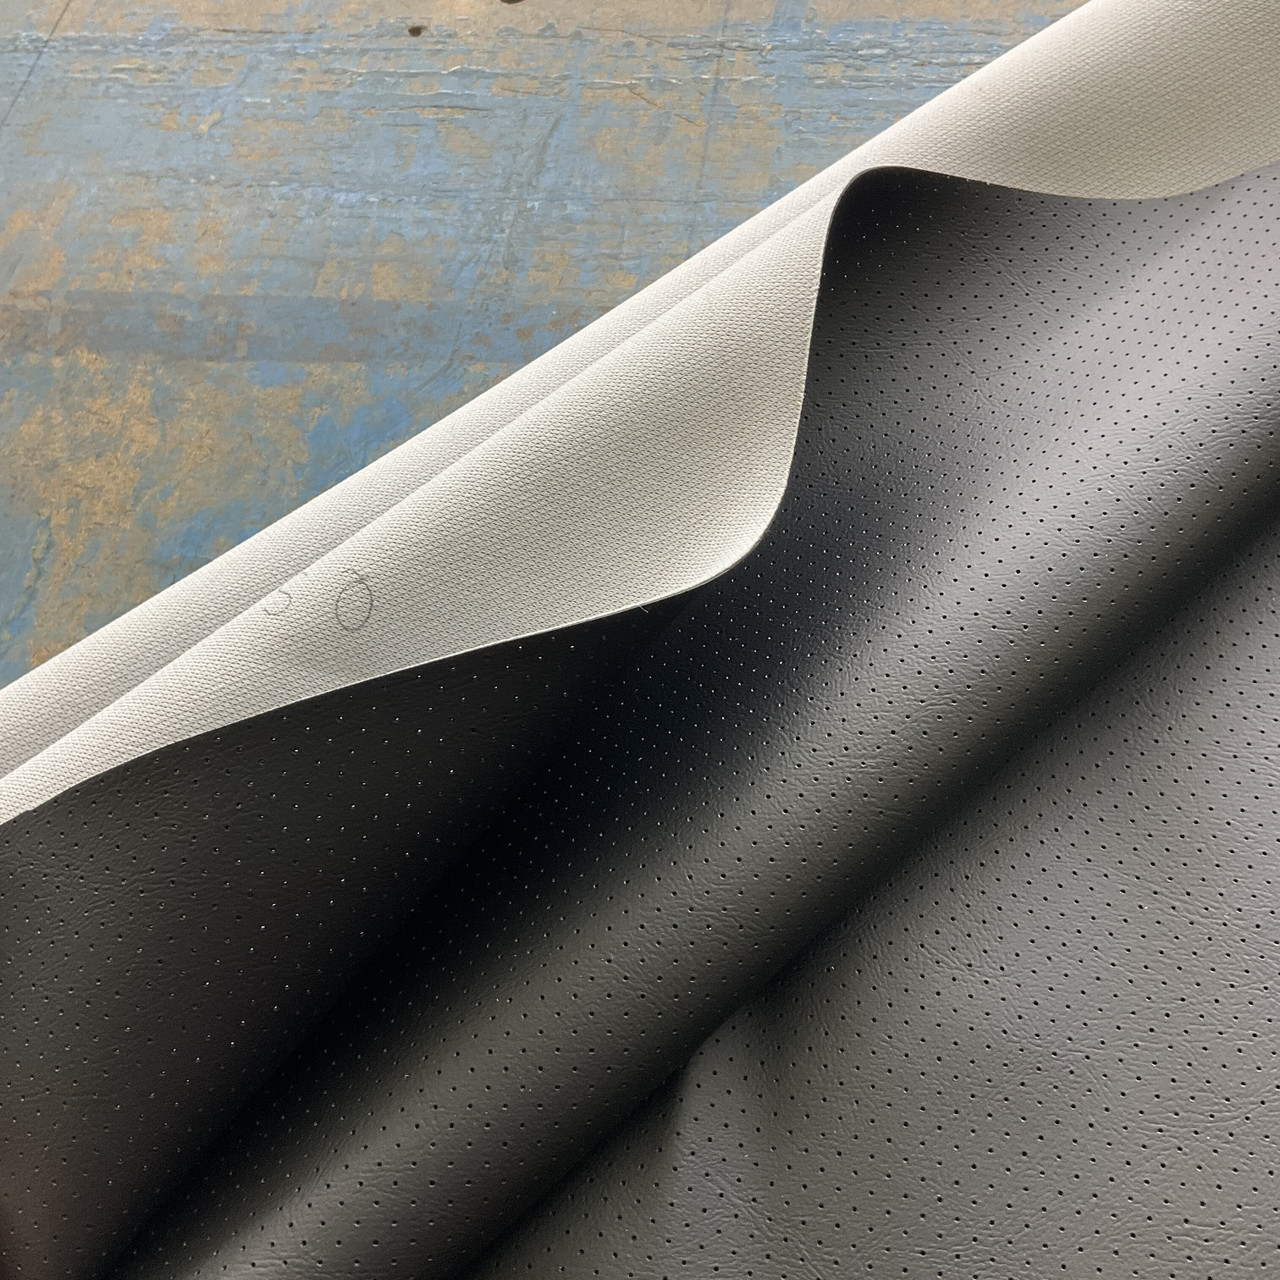 Ebony Black Marine Vinyl Fabric | ORI-1612 | Spradling Softside ORION |  Upholstery Vinyl for Boats / Automotive / Commercial Seating | 54W | BTY